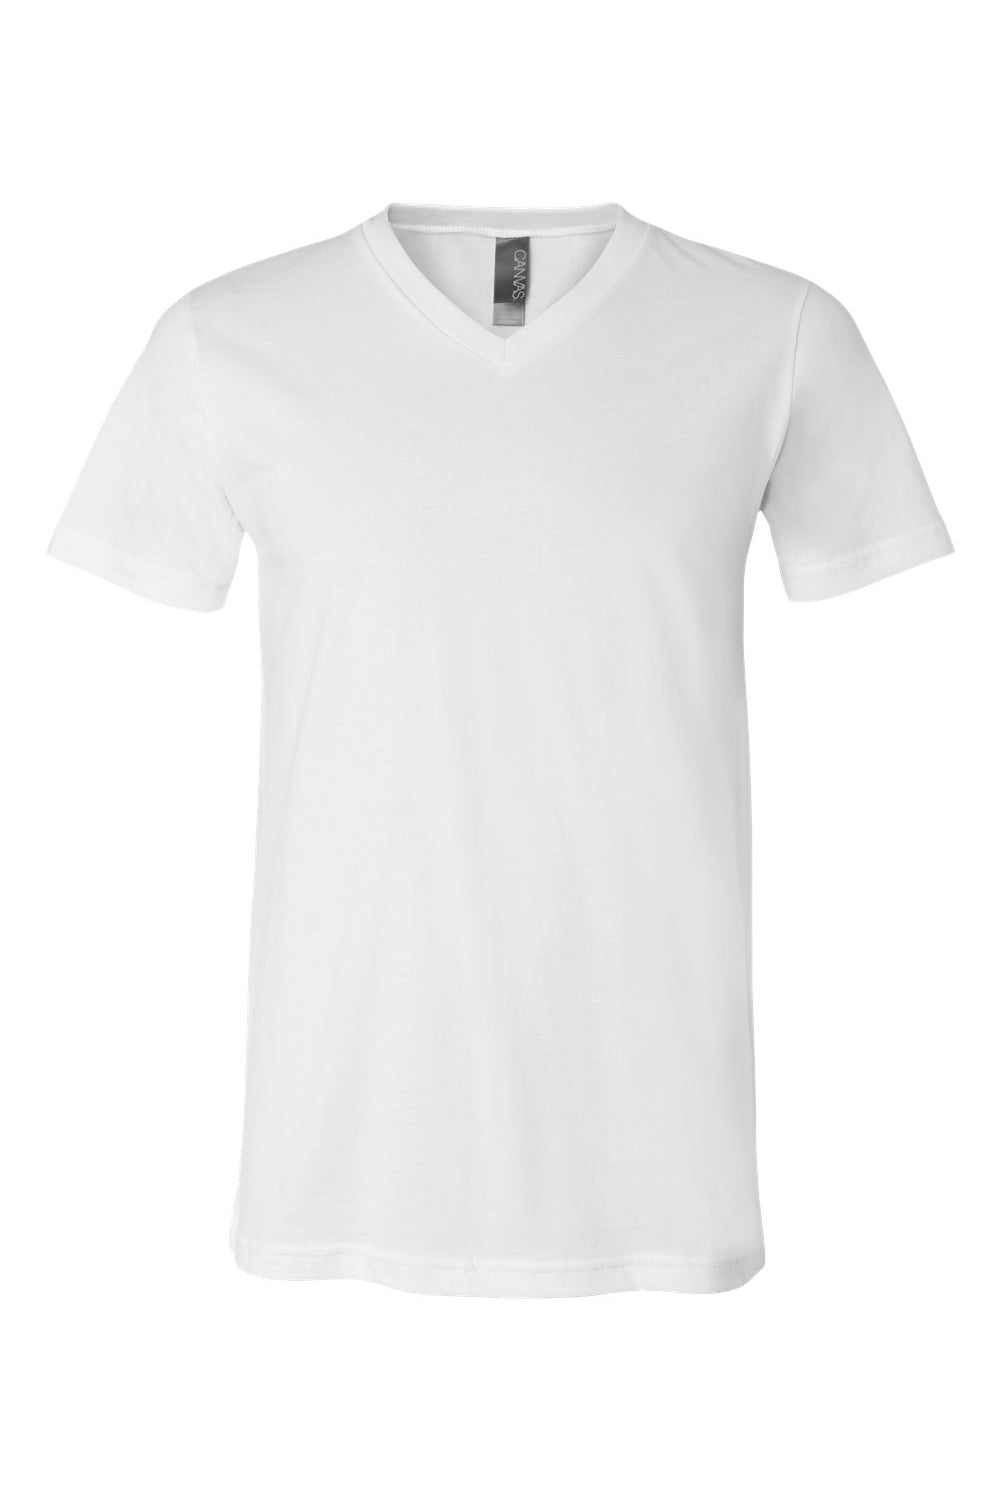 Bella + Canvas BC3005/3005/3655C Mens Jersey Short Sleeve V-Neck T-Shirt White Flat Front